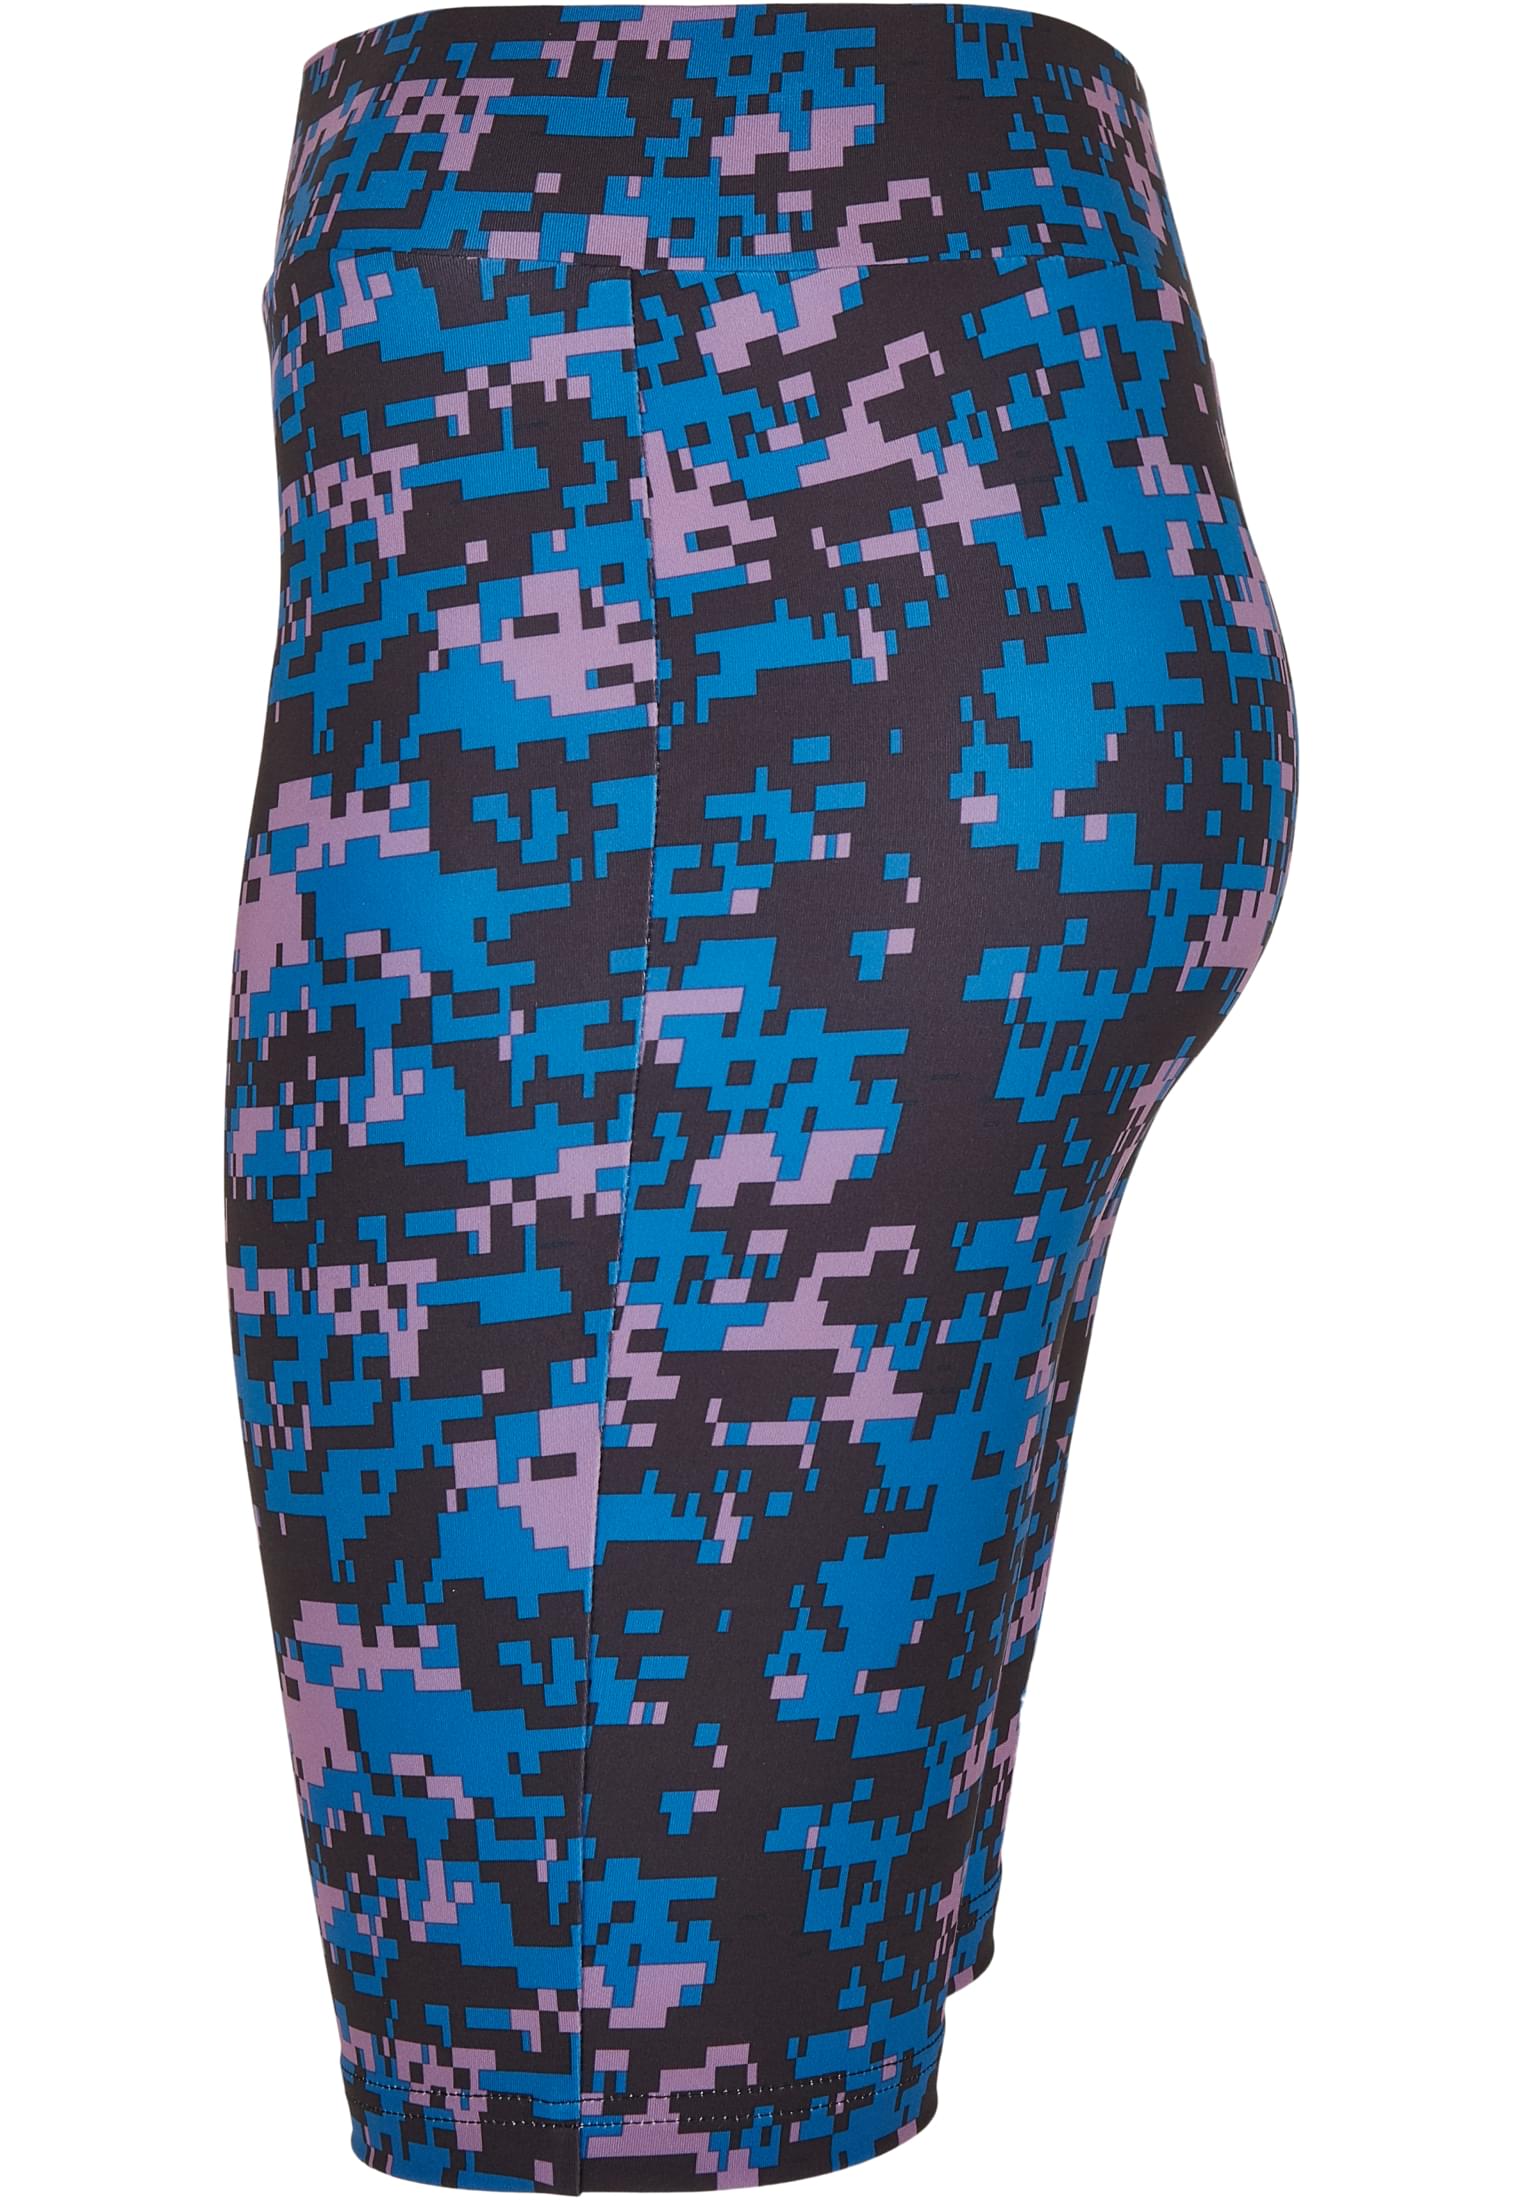 Frauen Ladies High Waist Camo Tech Cycle Shorts in Farbe digital duskviolet camo